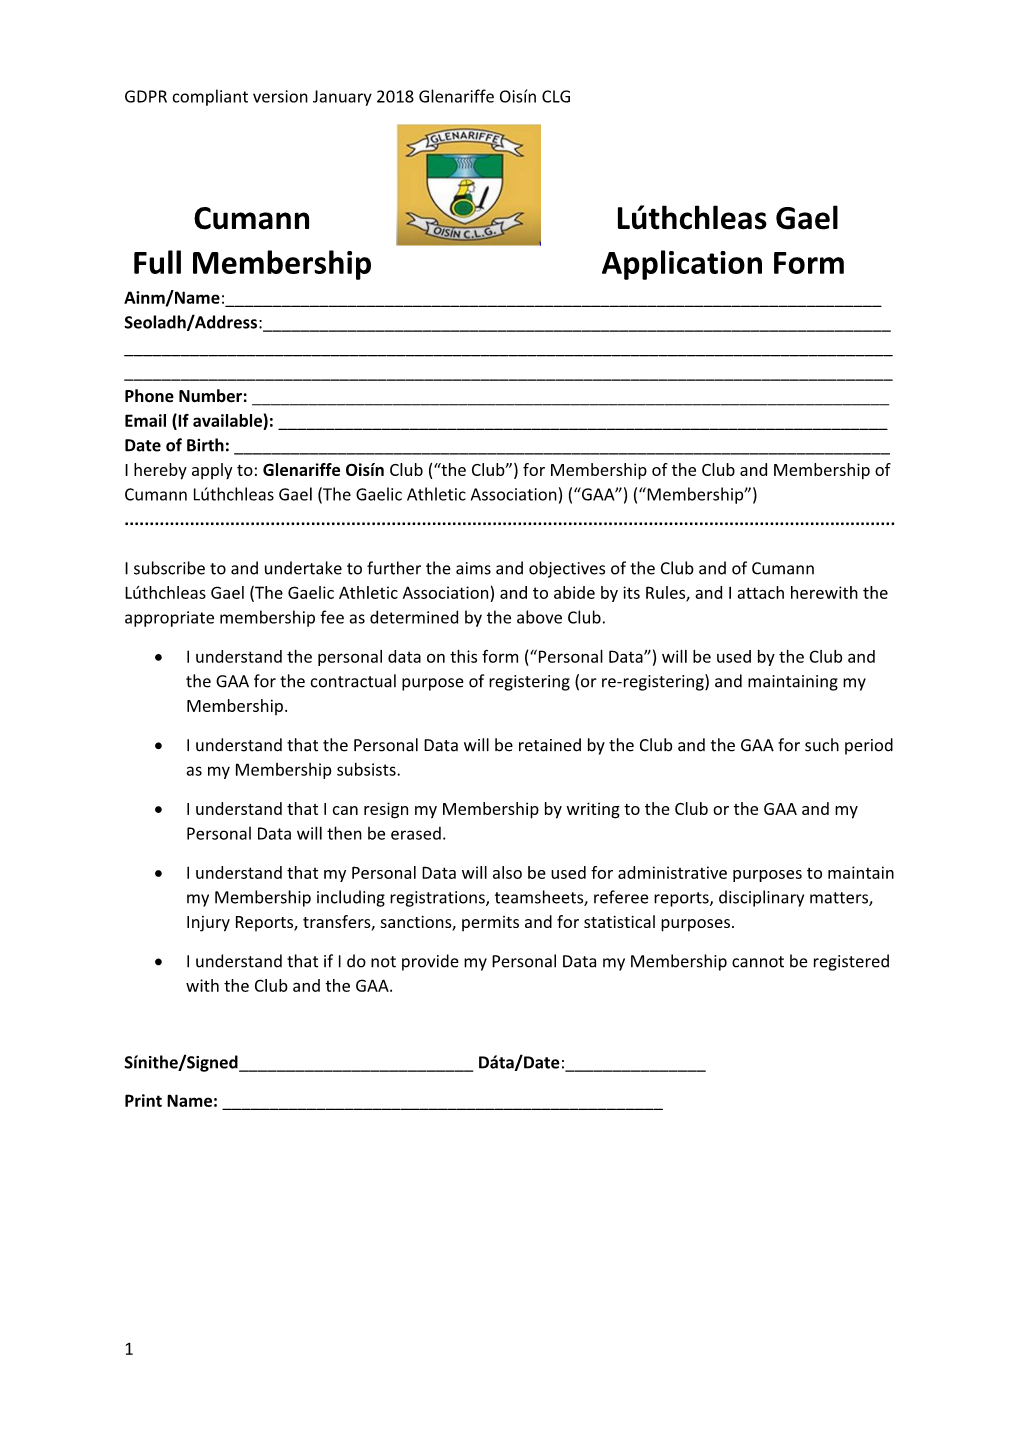 Full Membership Application Form